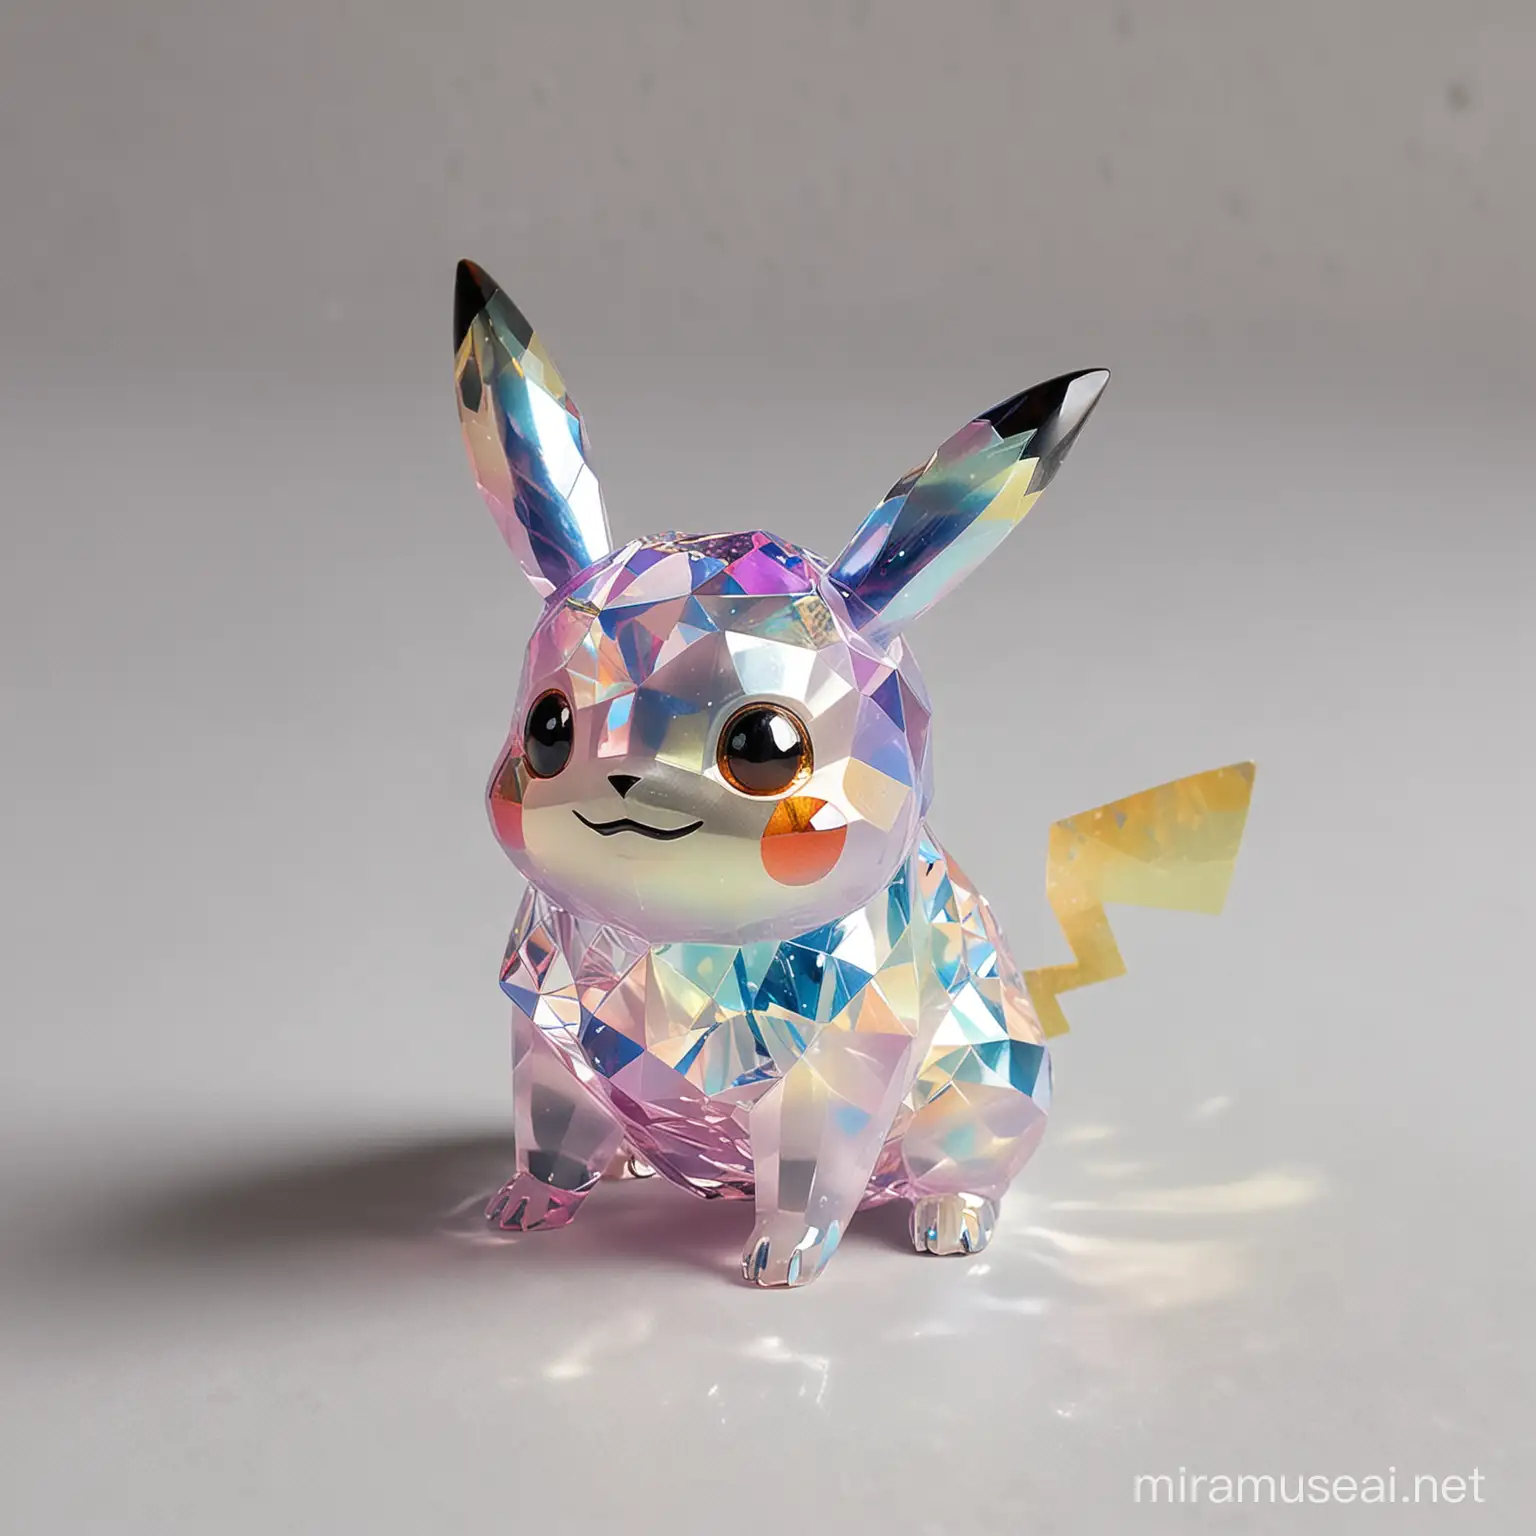 Shiny Iridescent Crystal Pikachu Sculpture